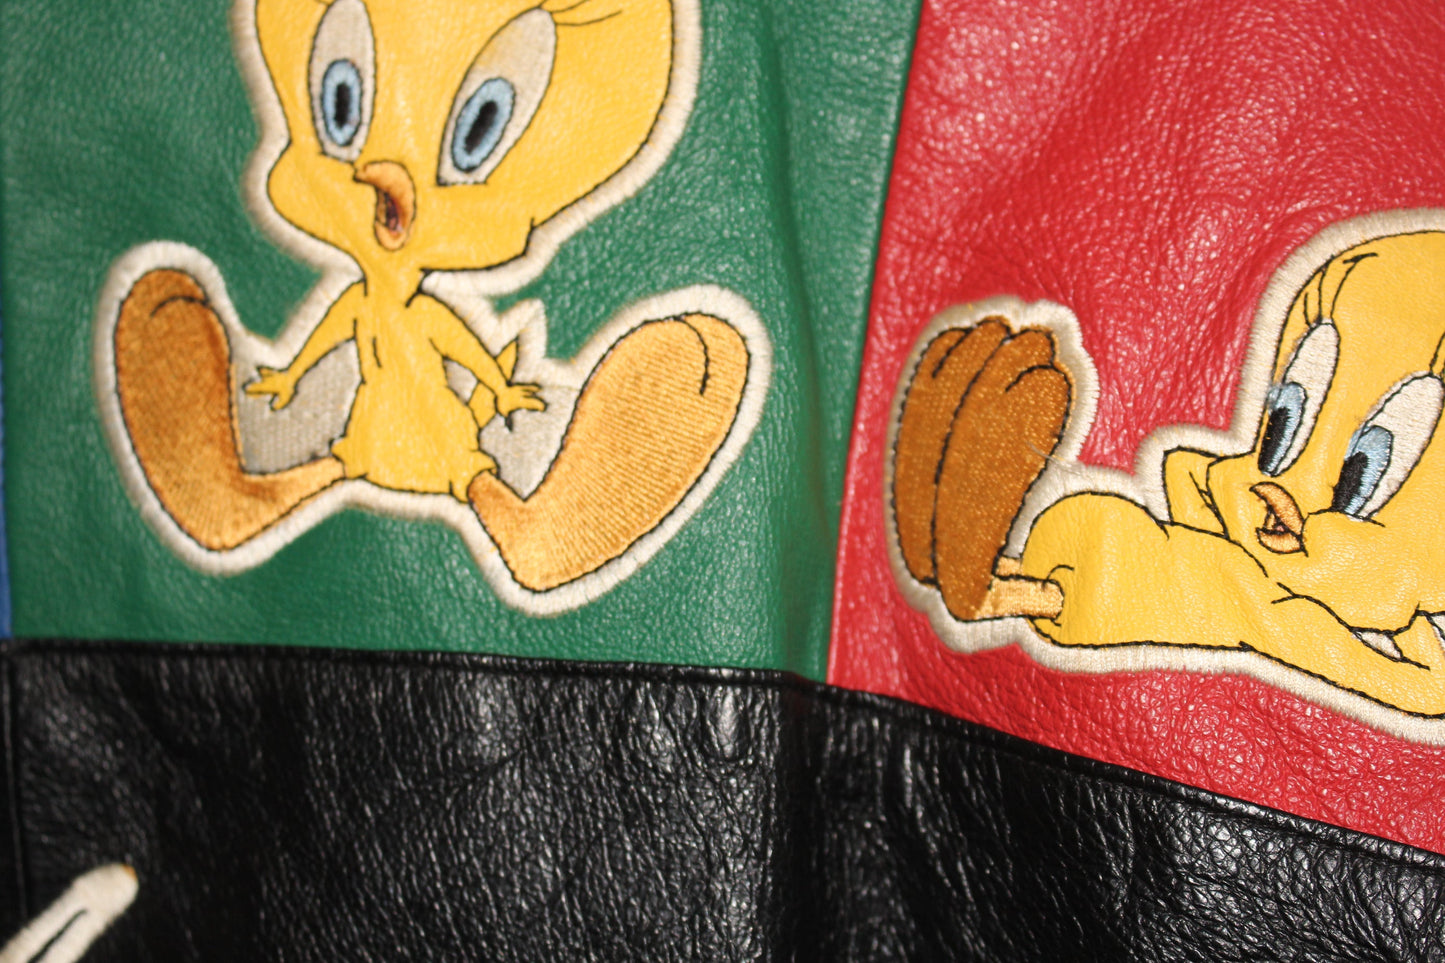 Rare Tweety Bird Looney Tunes Leather Jacket (S)